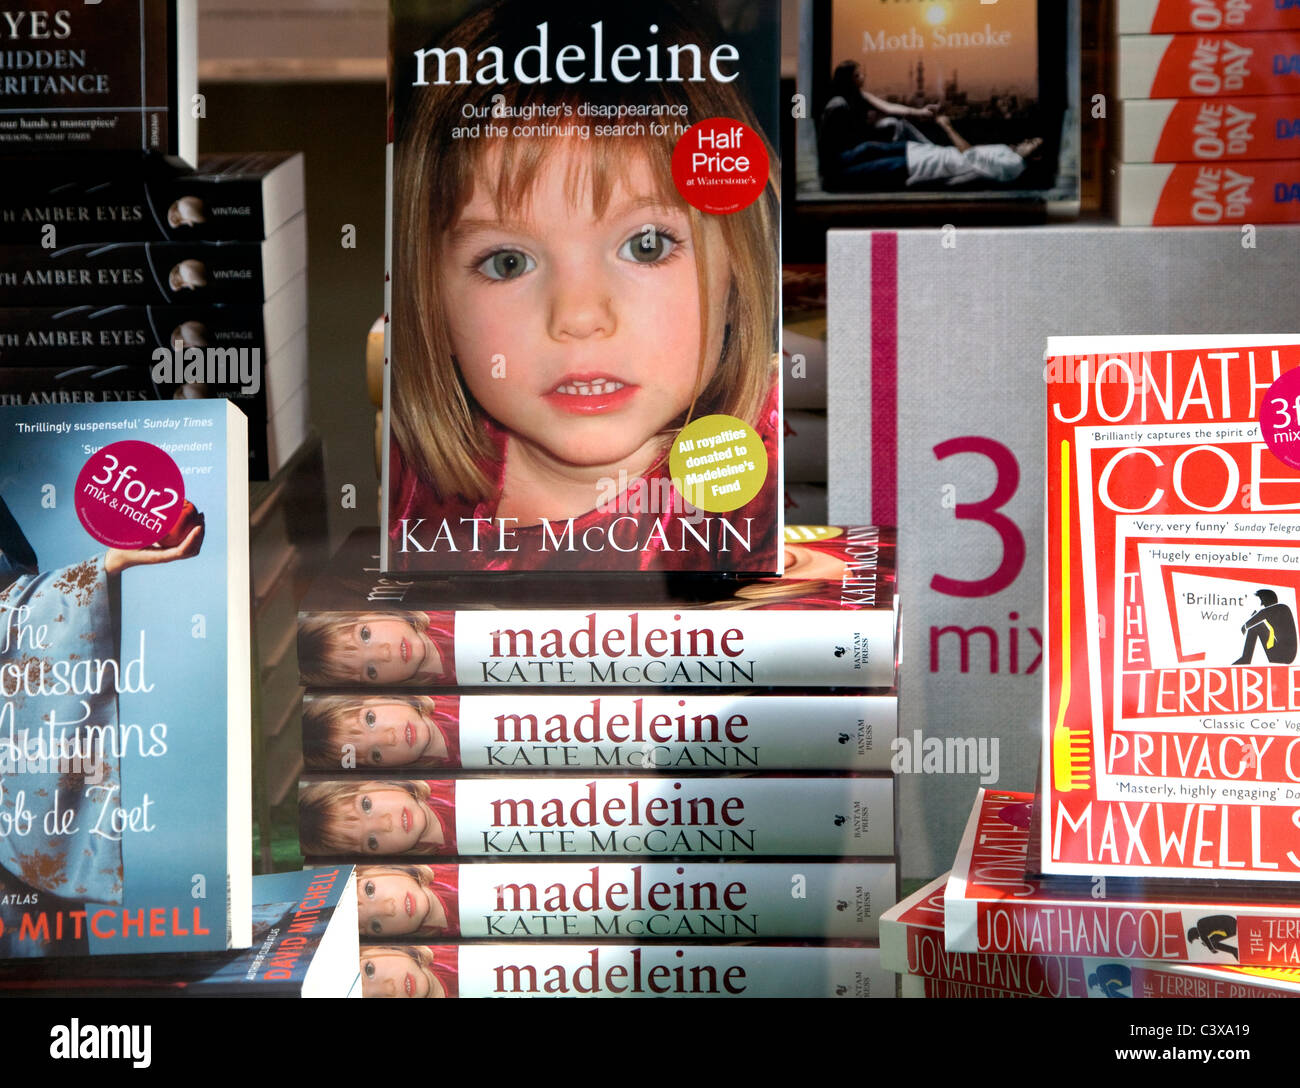 Madeleine McCann book on sale in London bookshop Stock Photo